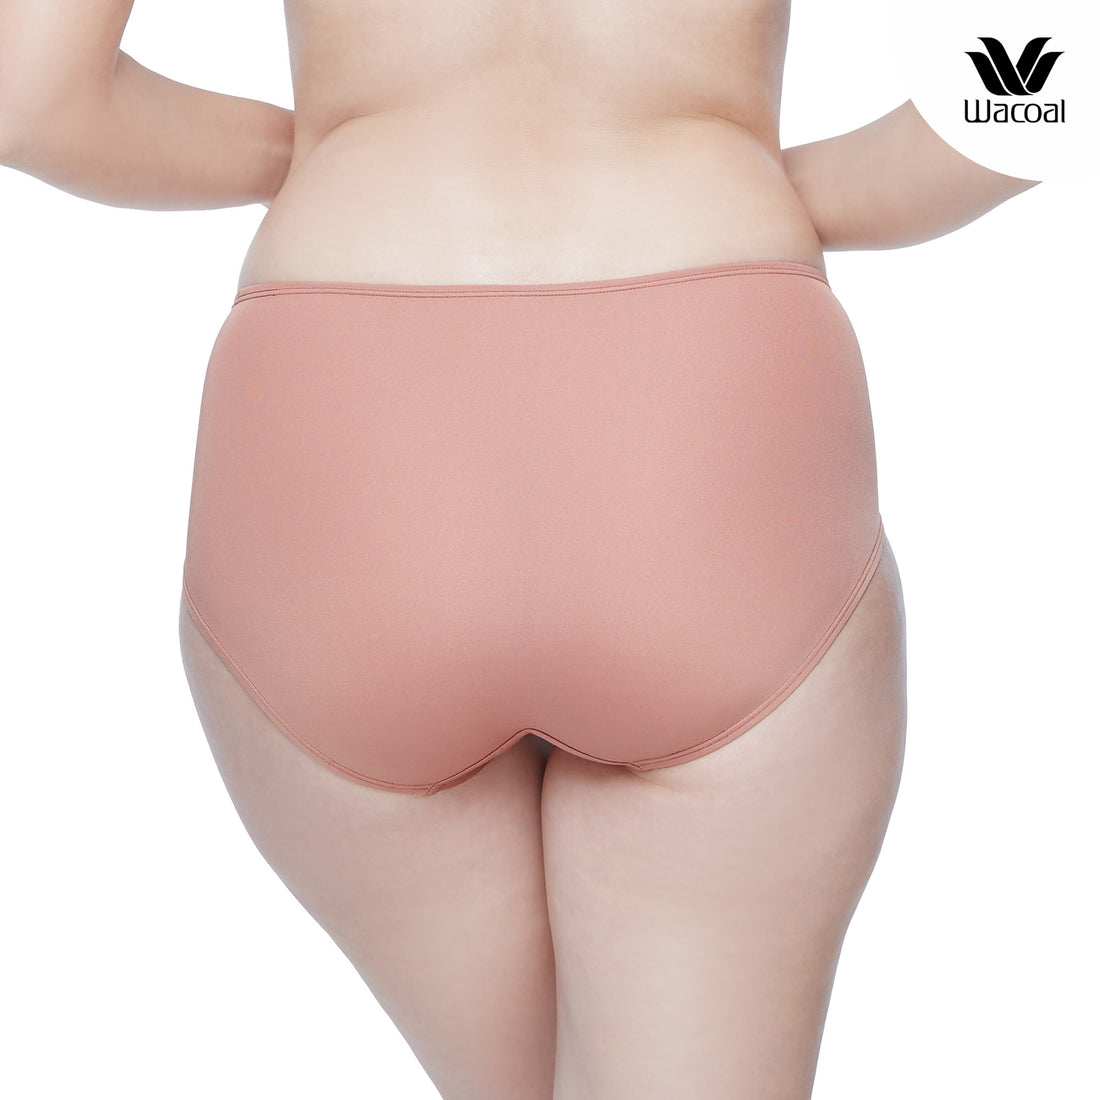 Wacoal Curve Diva, supportive bra, large cup women, model WB7543/WQ1535, brick orange (BN)